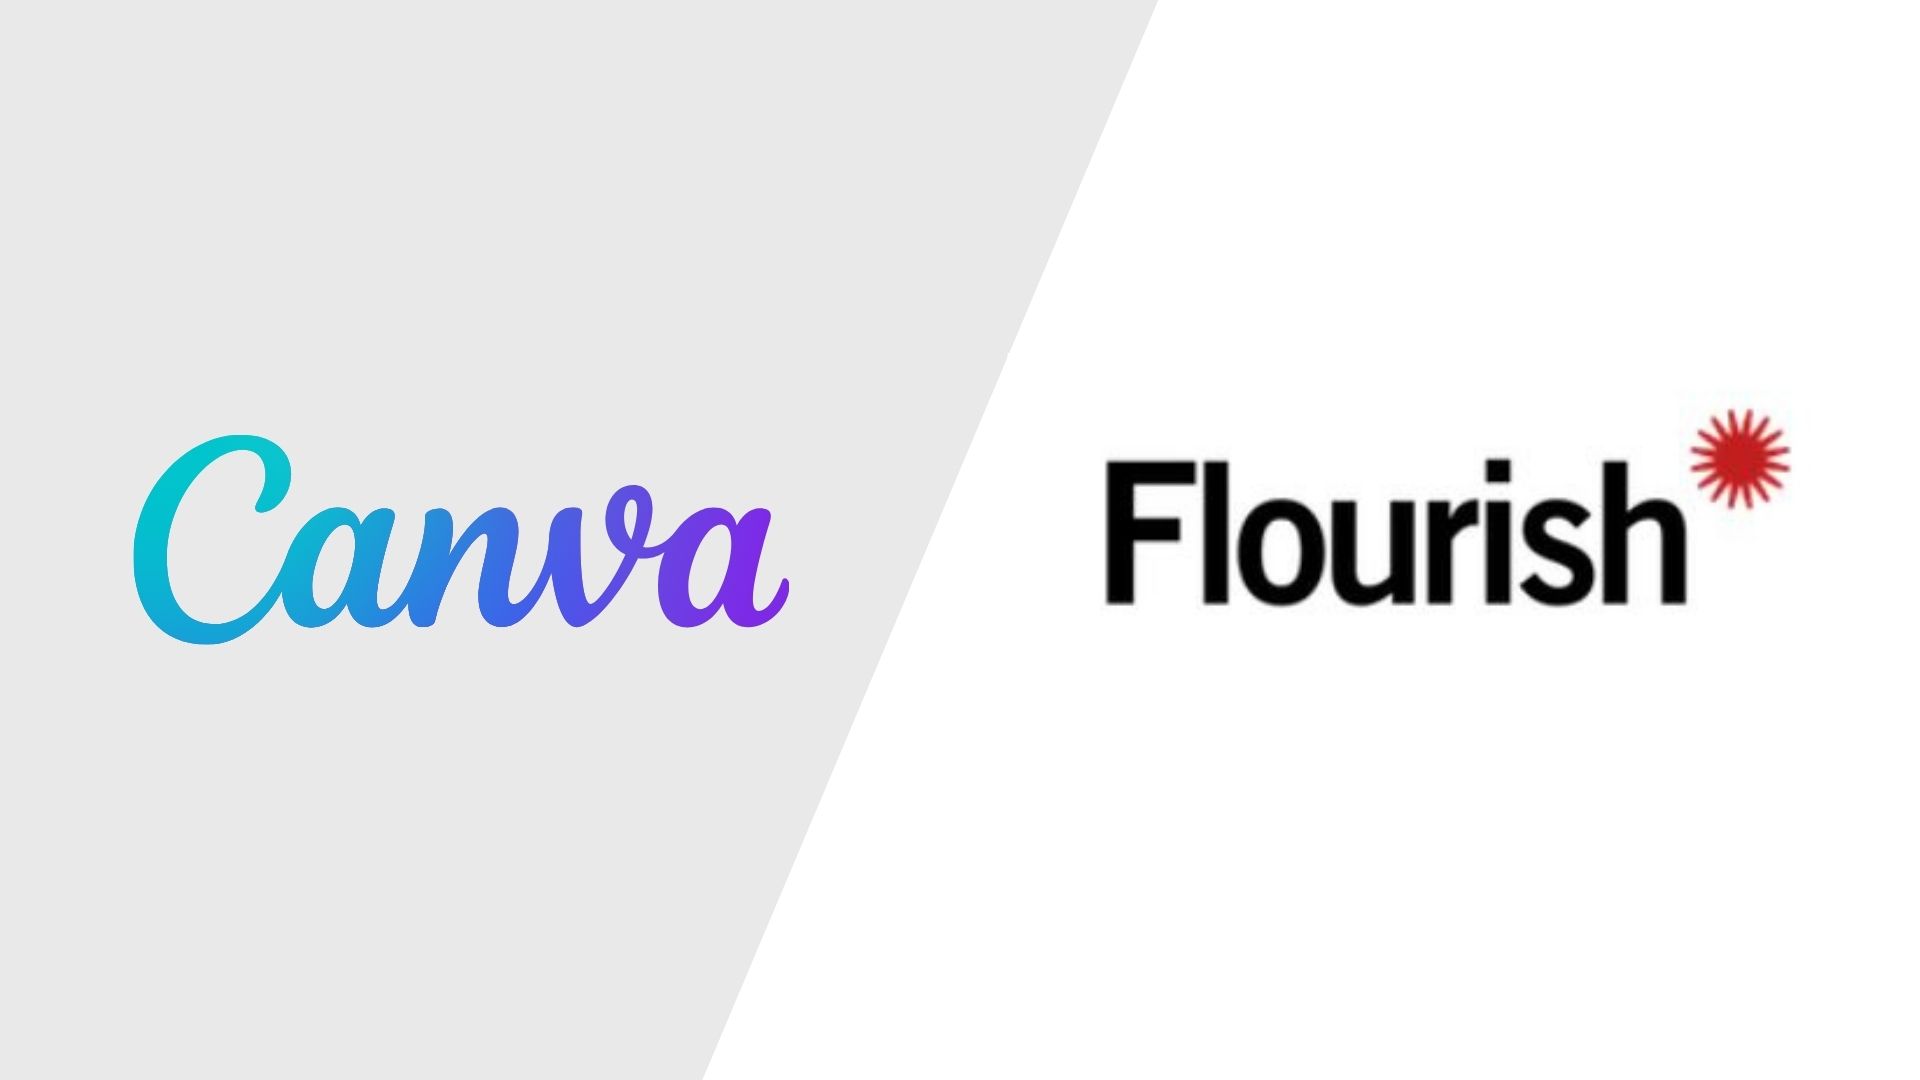 Canva acquires Flourish to enhance data visualization